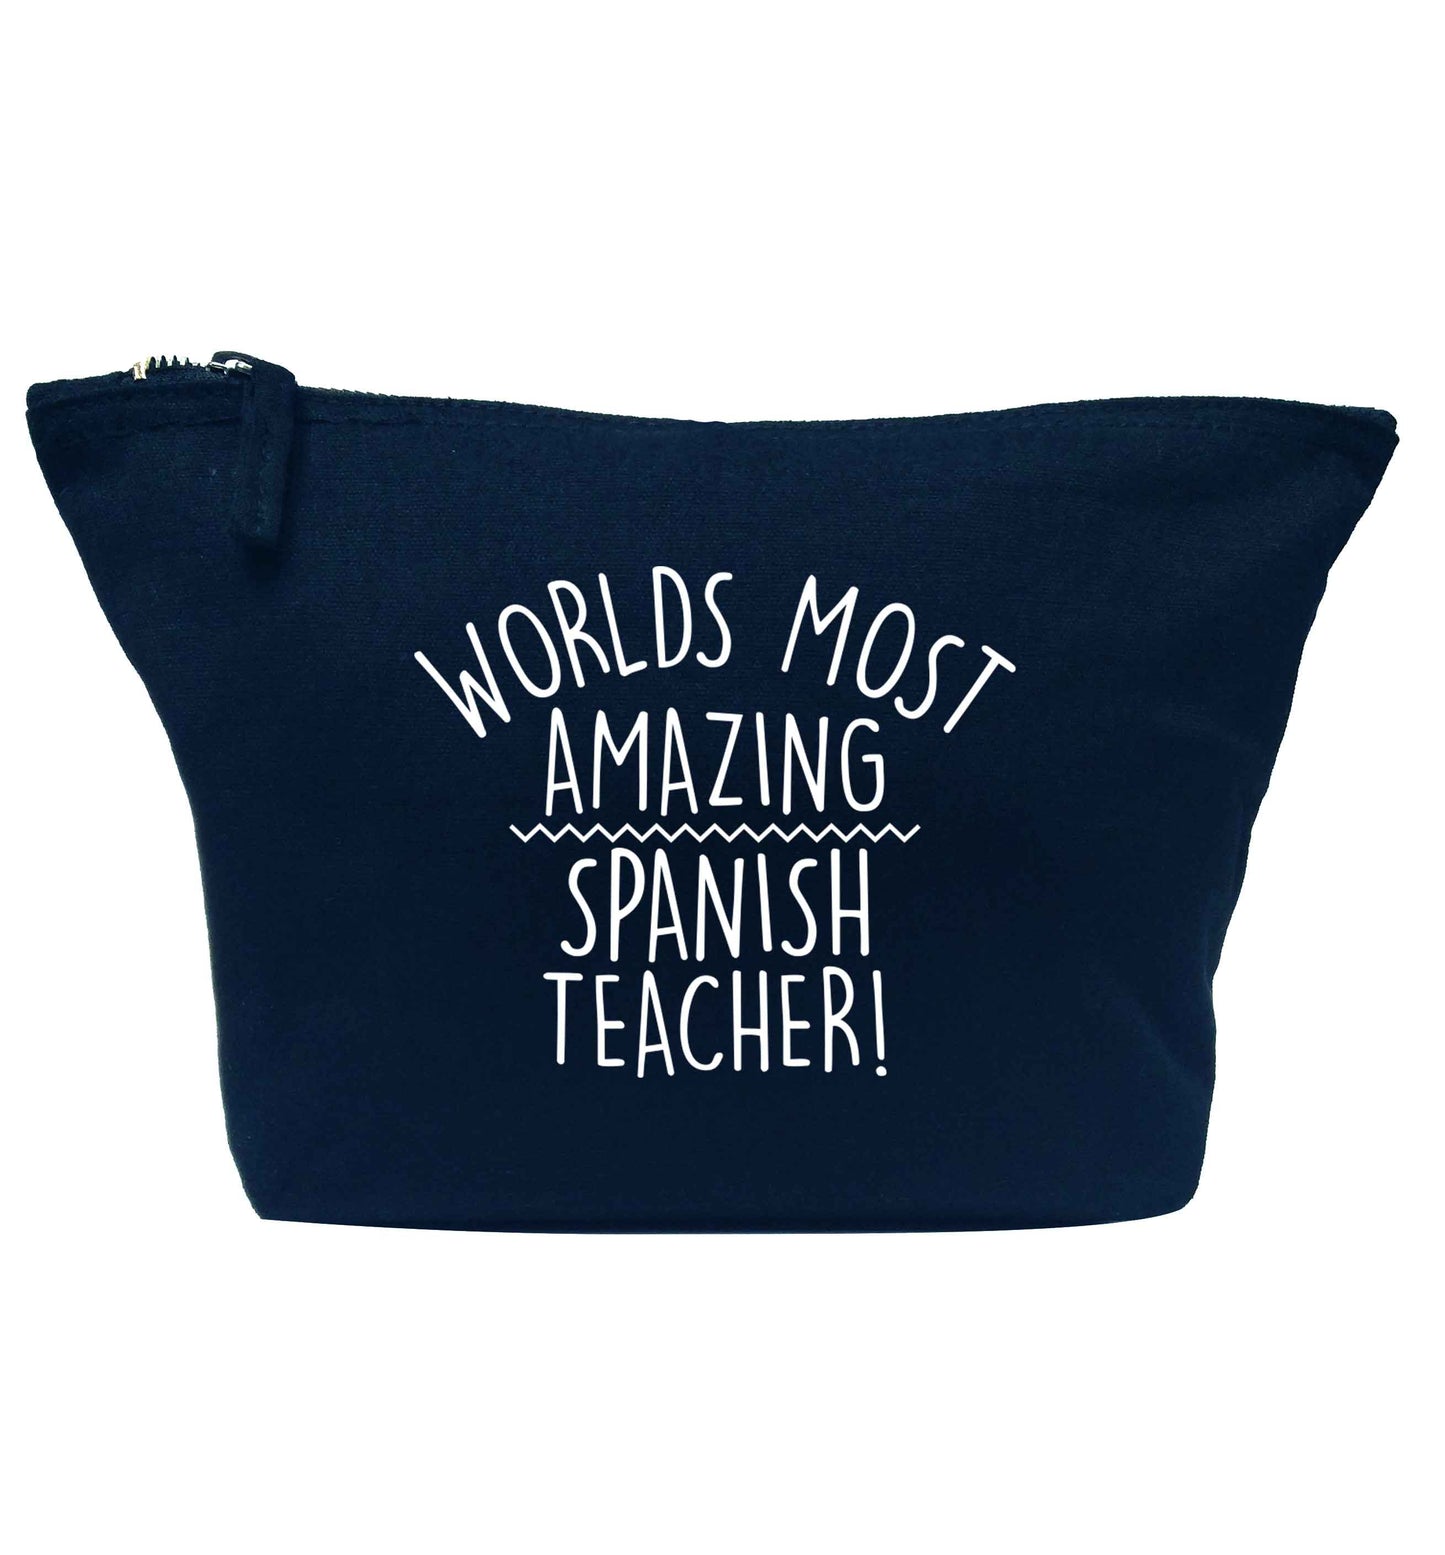 Worlds most amazing Spanish teacher navy makeup bag